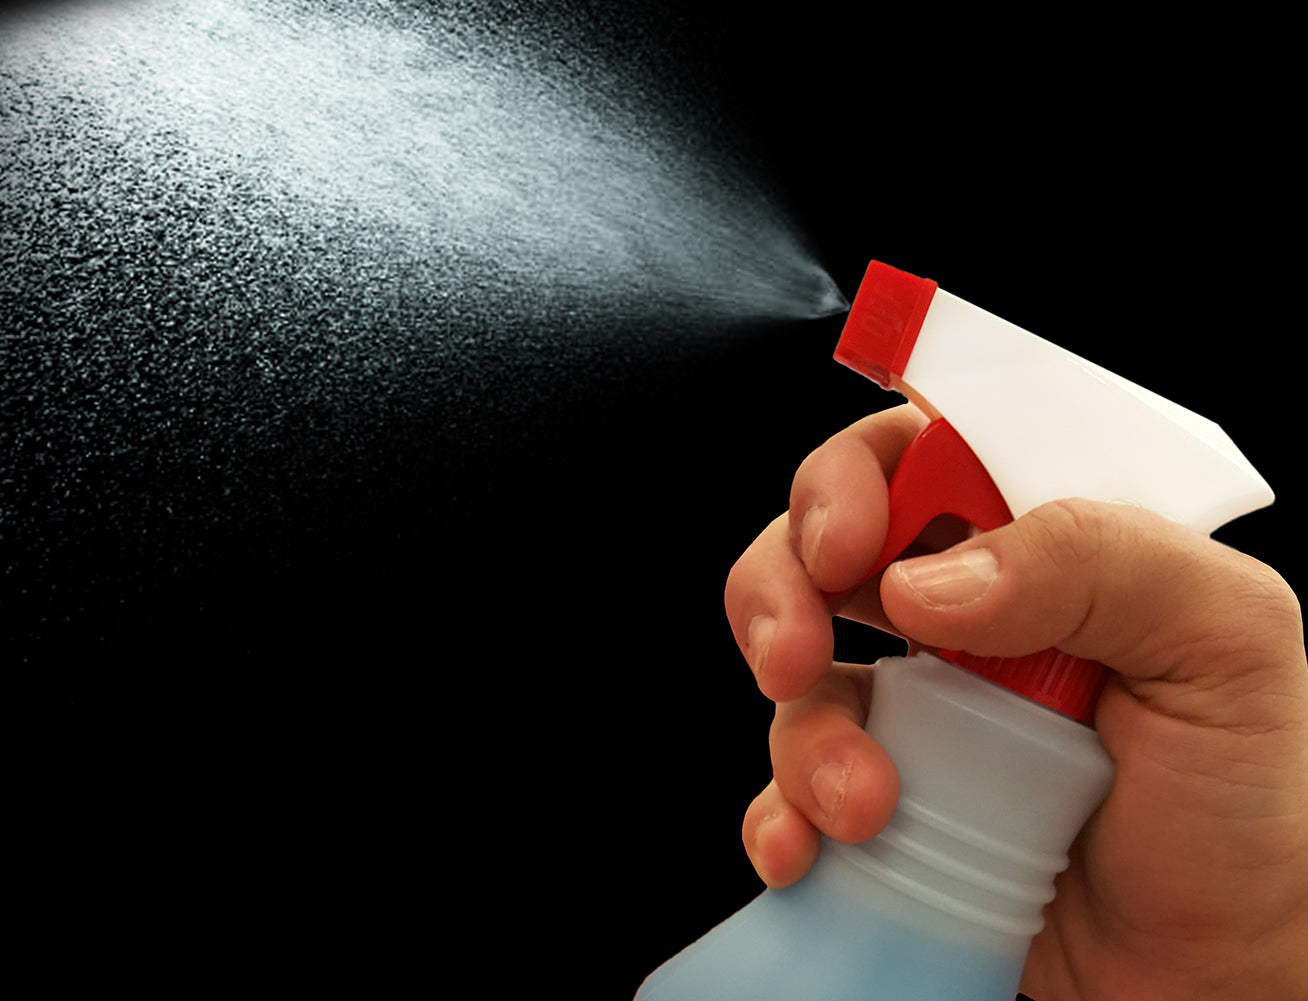 Clorox Bathroom Bleach Foamer Spray Diversion Safe (Working Spray